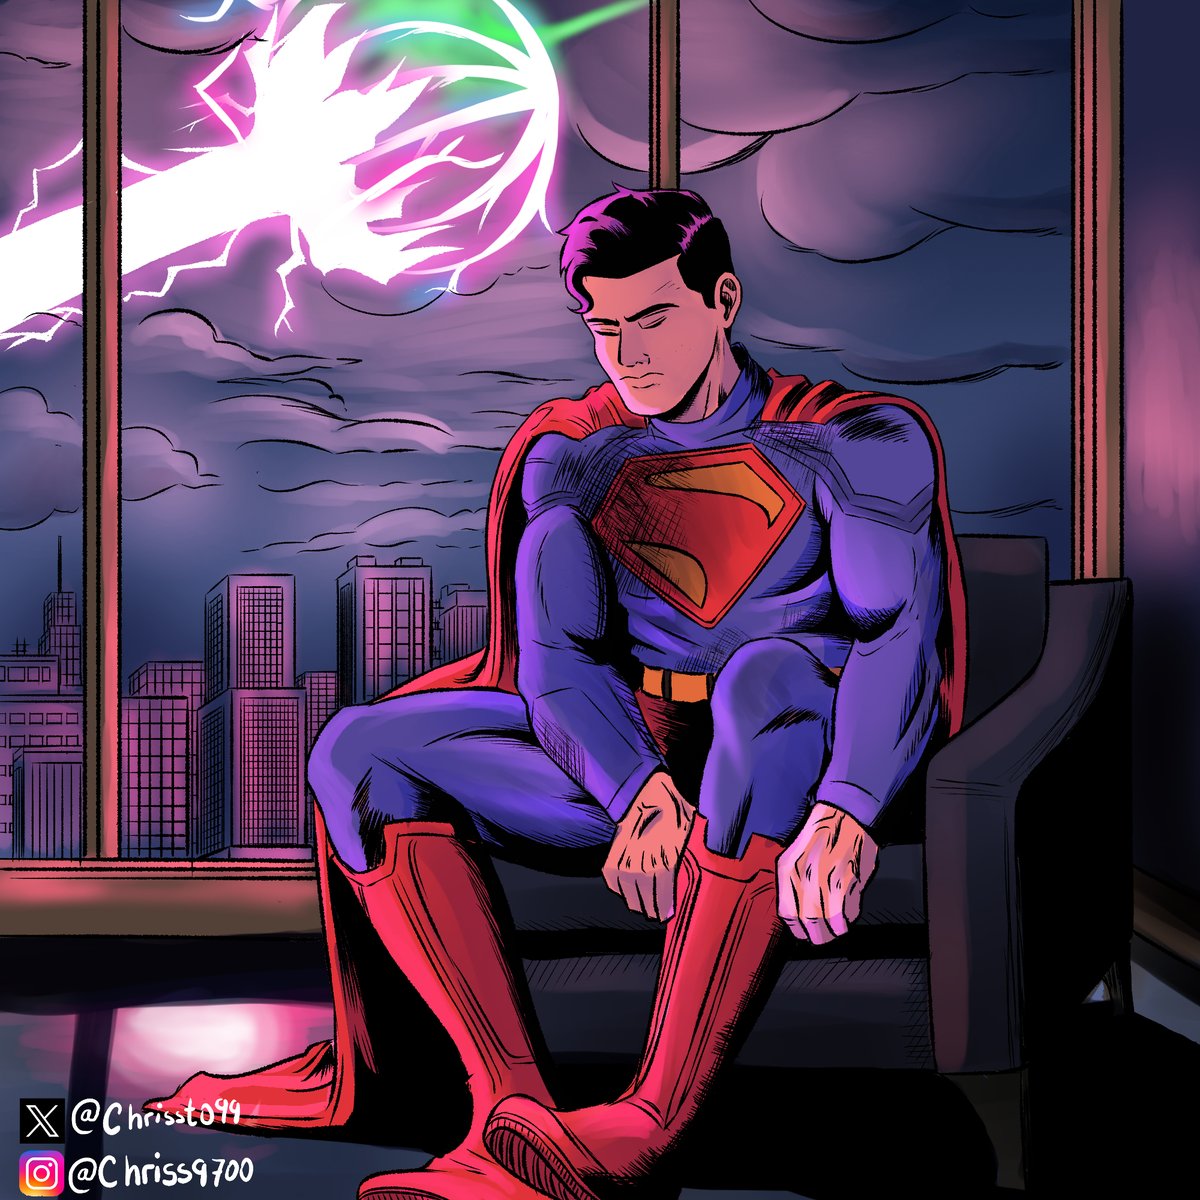 Superman
#dccomics #superman #clarkent #justiceleague #dcheroes #art #artwork #wip #digitaldrawing #fanart